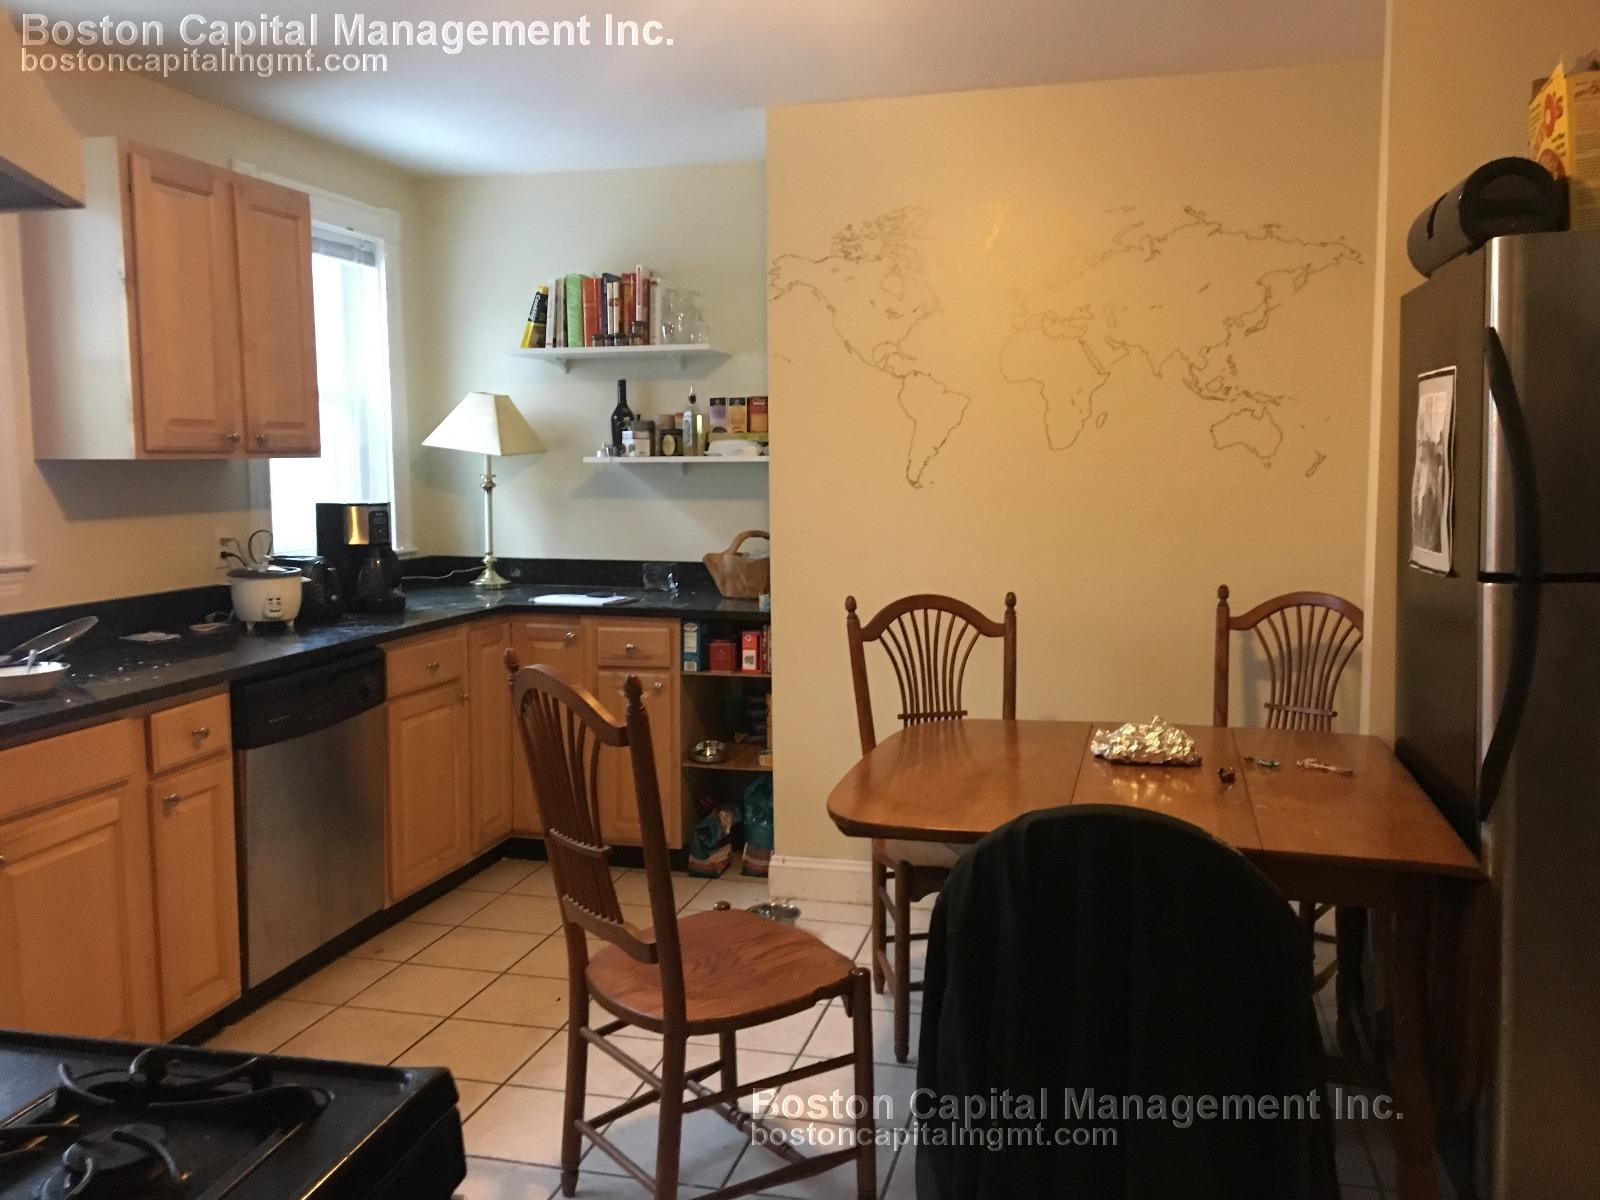 Photos of apartment on Wallingford Rd.,Boston MA 02135